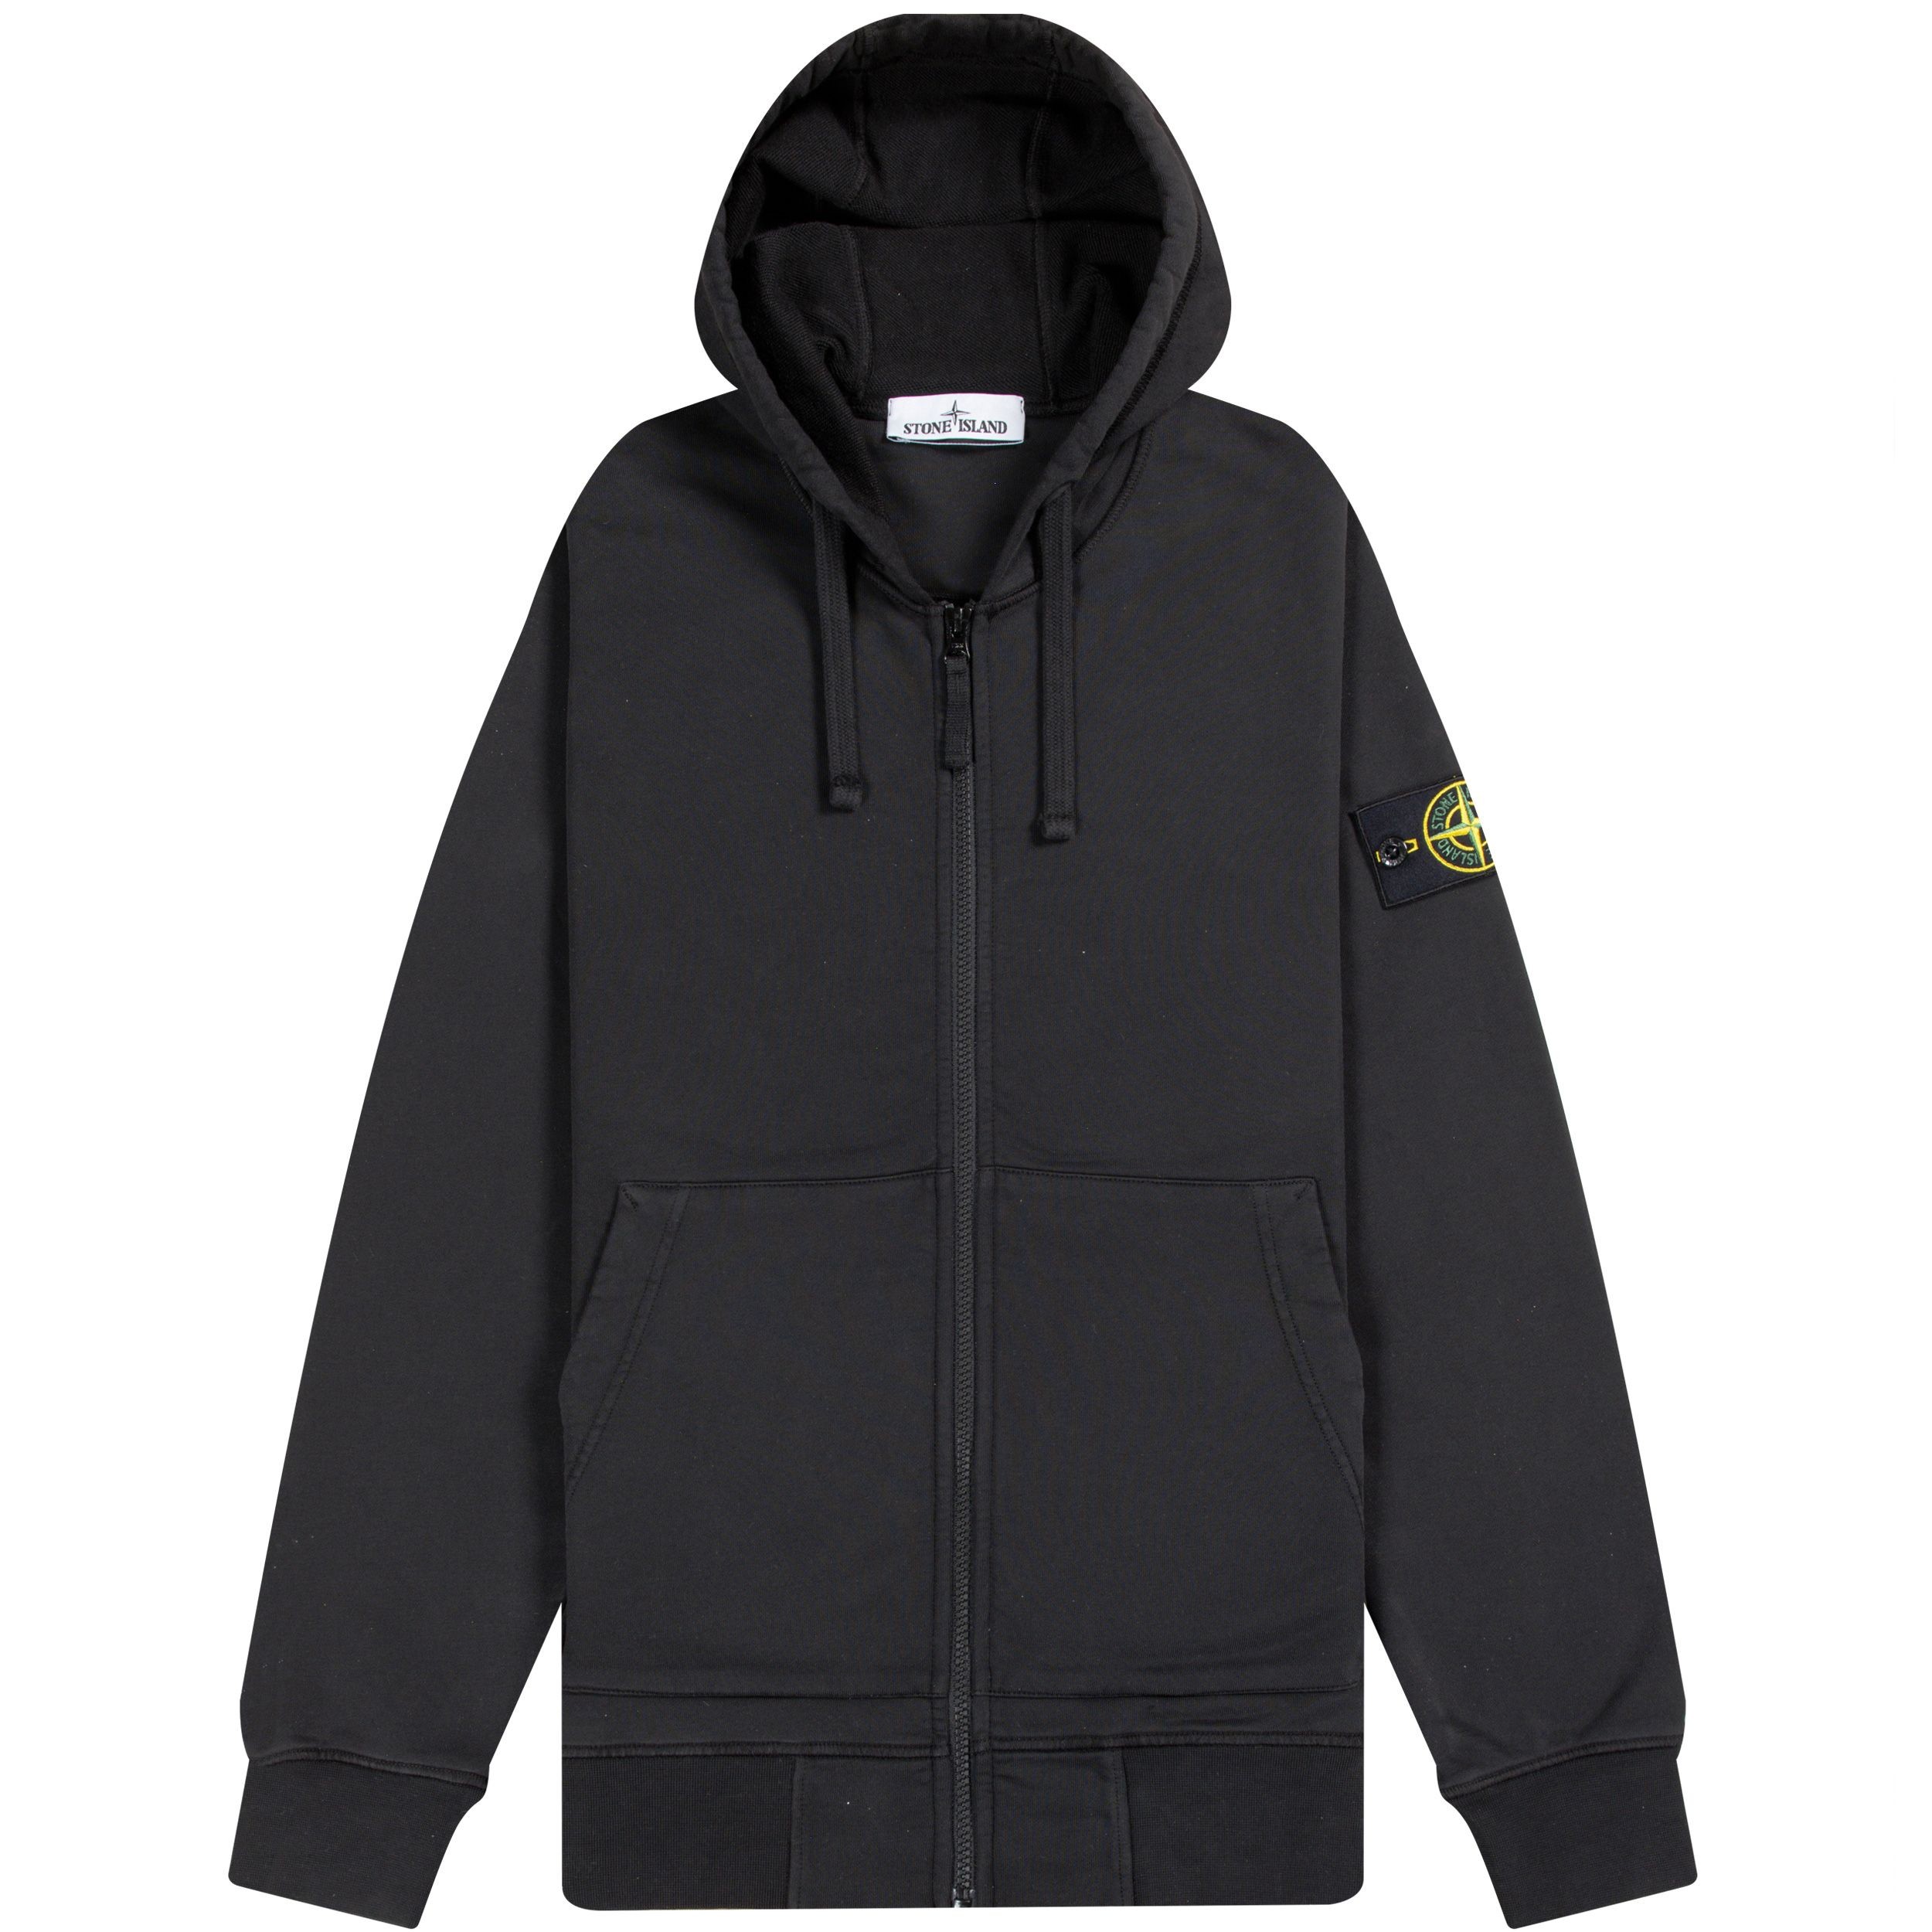 Stone Island 'Full-zip' Hooded Sweatshirt Black